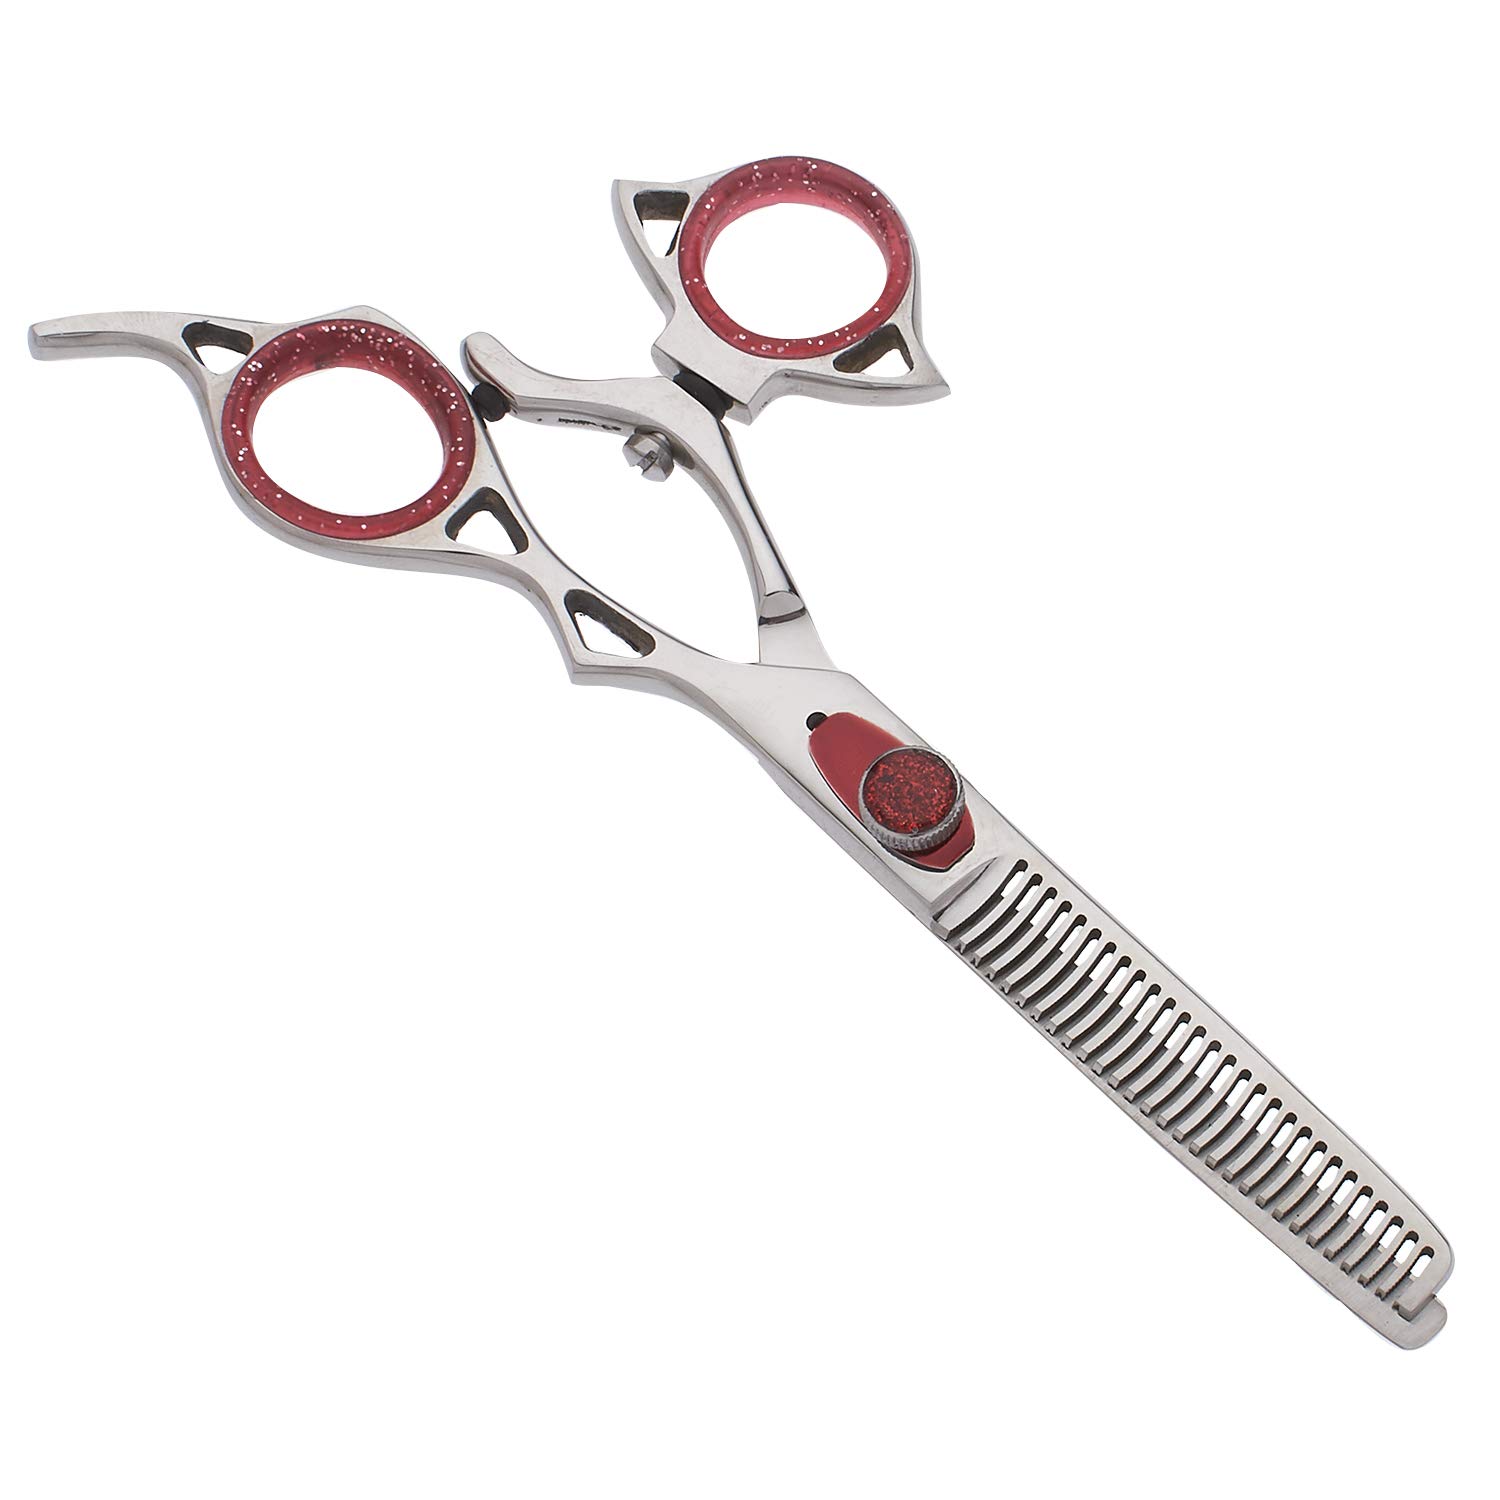 Professional Hair Cutting Scissors Set, Razor Edge Thinning Texturizing Shears for Barber Hairdressing Salon Adjustable Finger Ring + Zipper Case, Stainless Steel